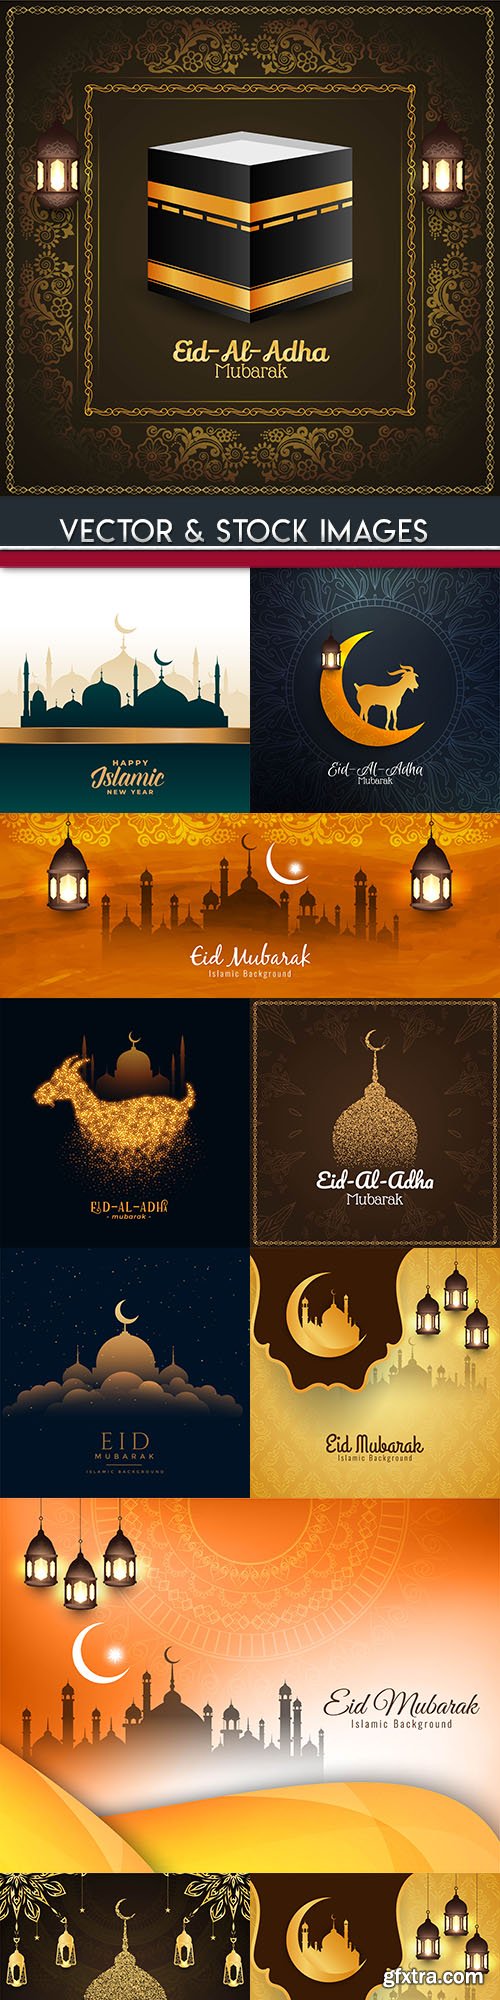 Ramadan Kareem Islamic culture collection illustrations 15